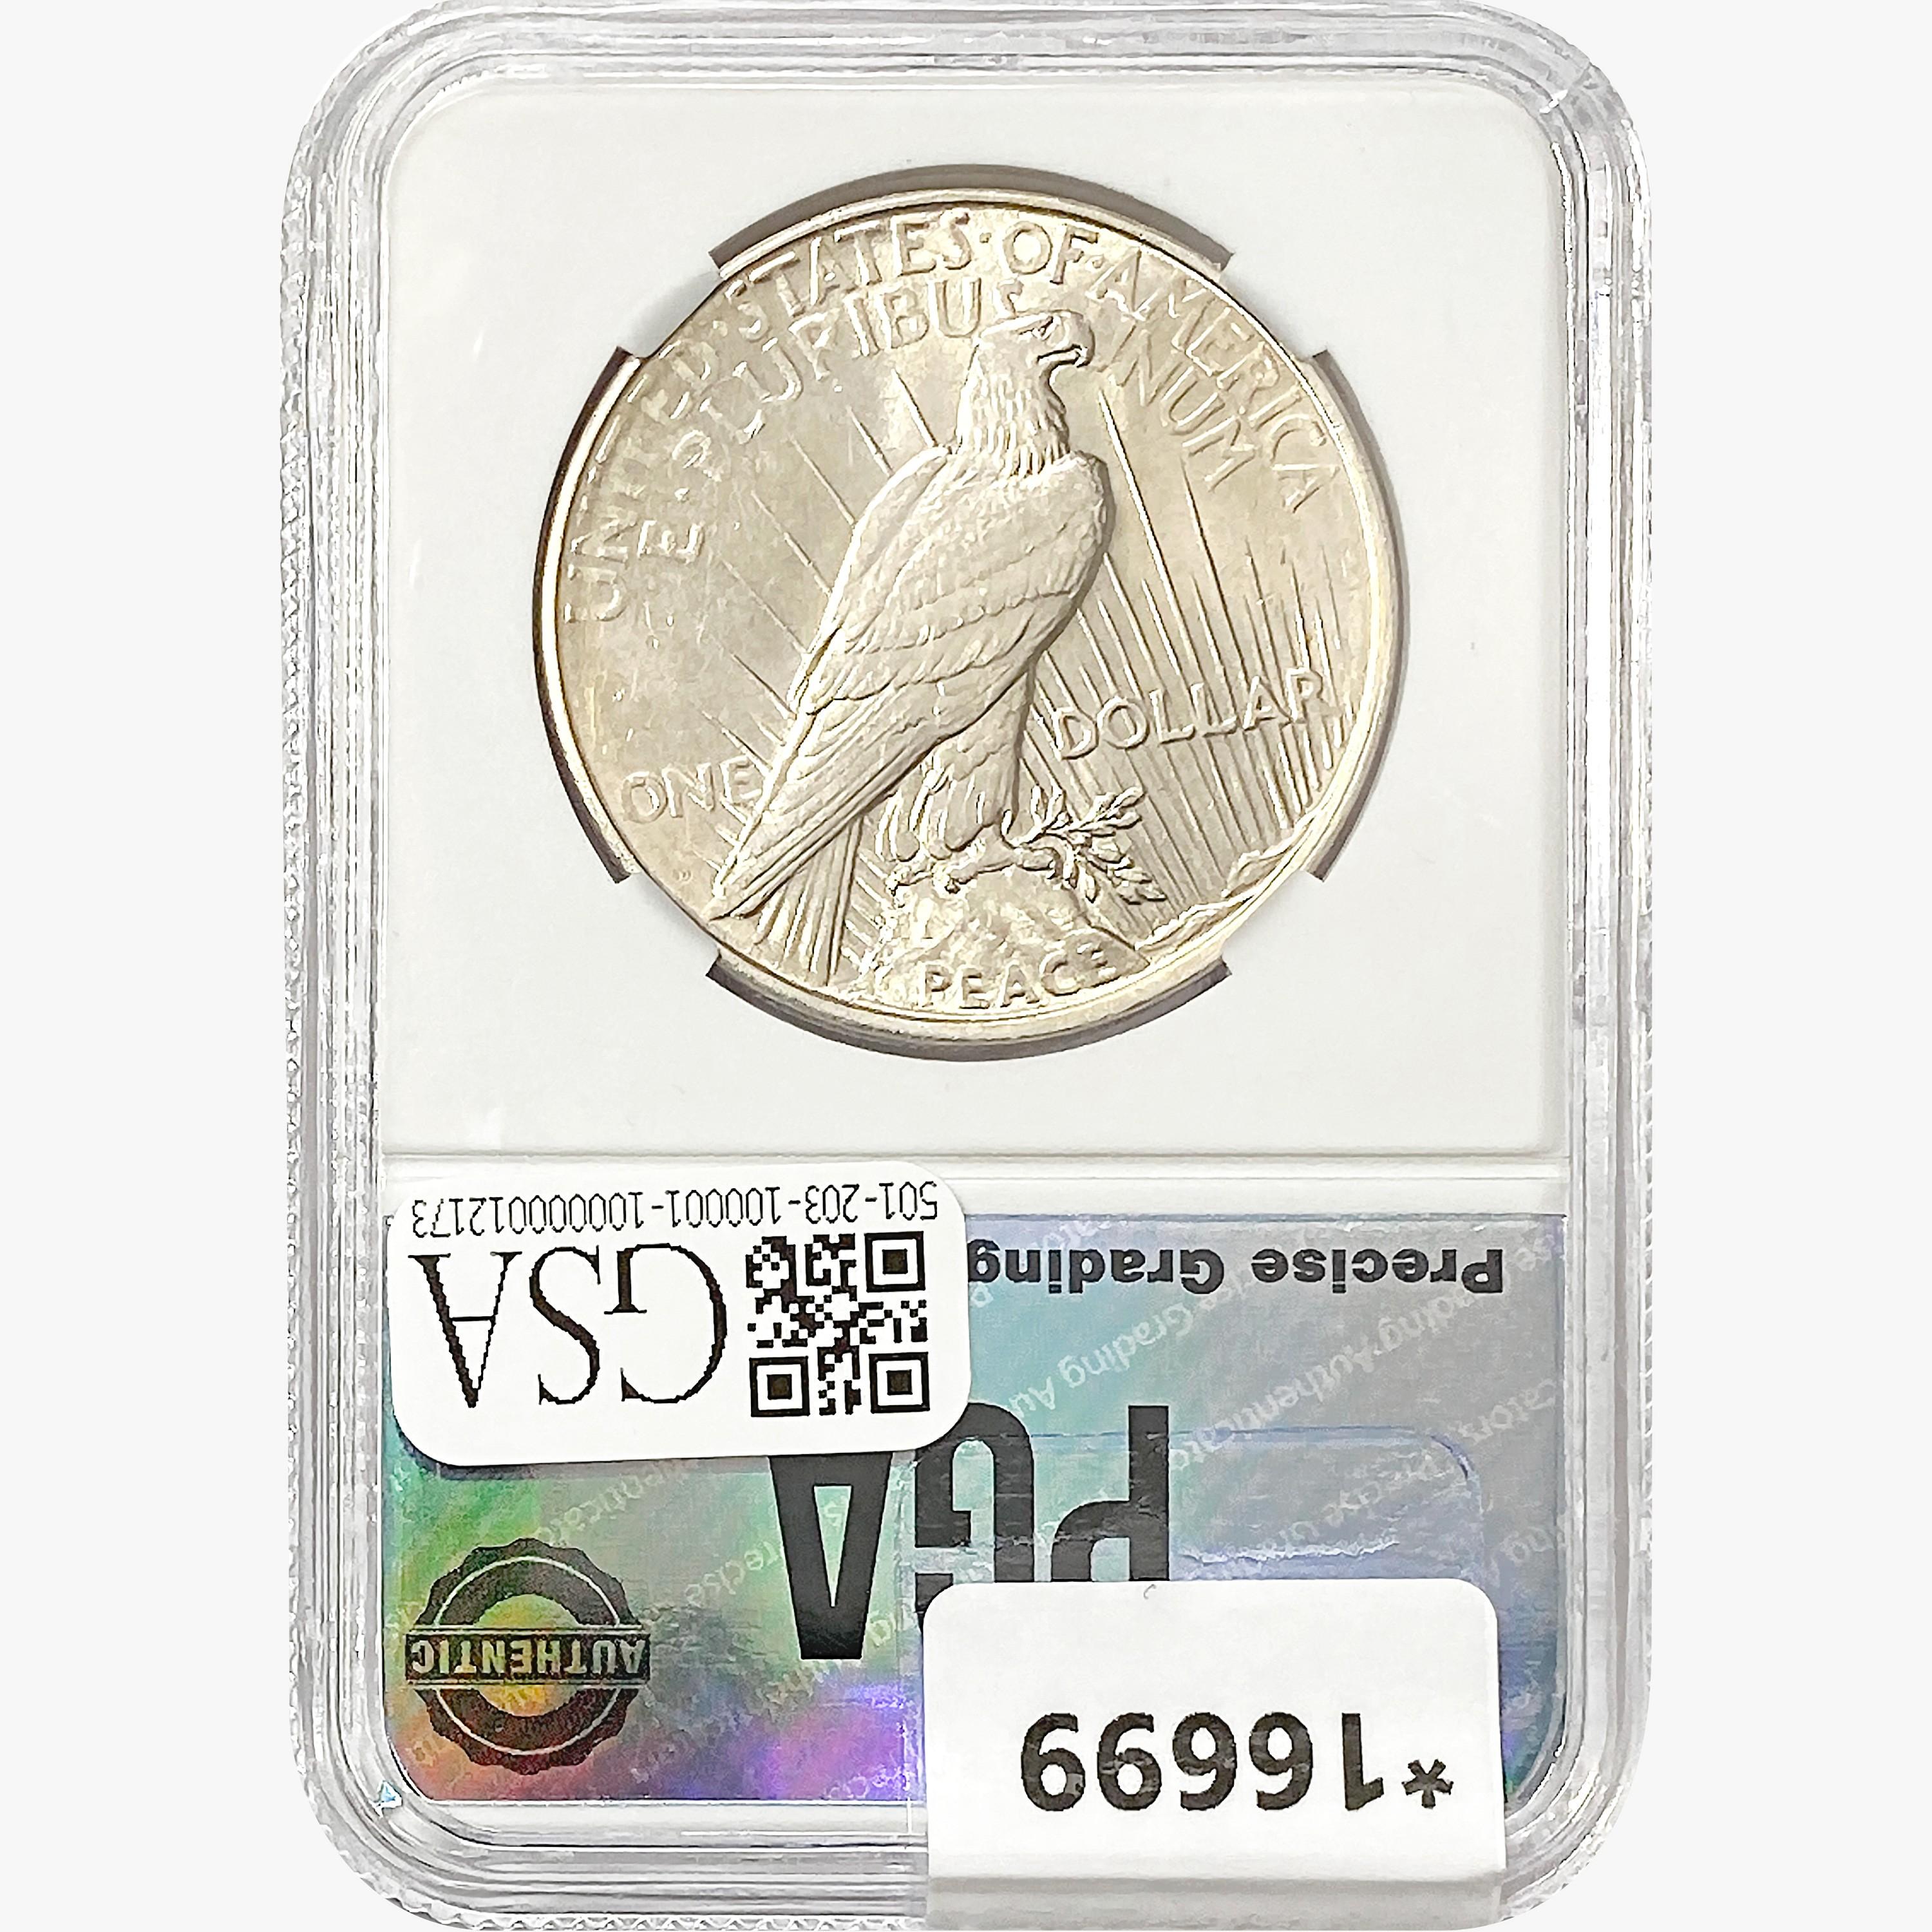 1926-D Silver Peace Dollar PGA MS63